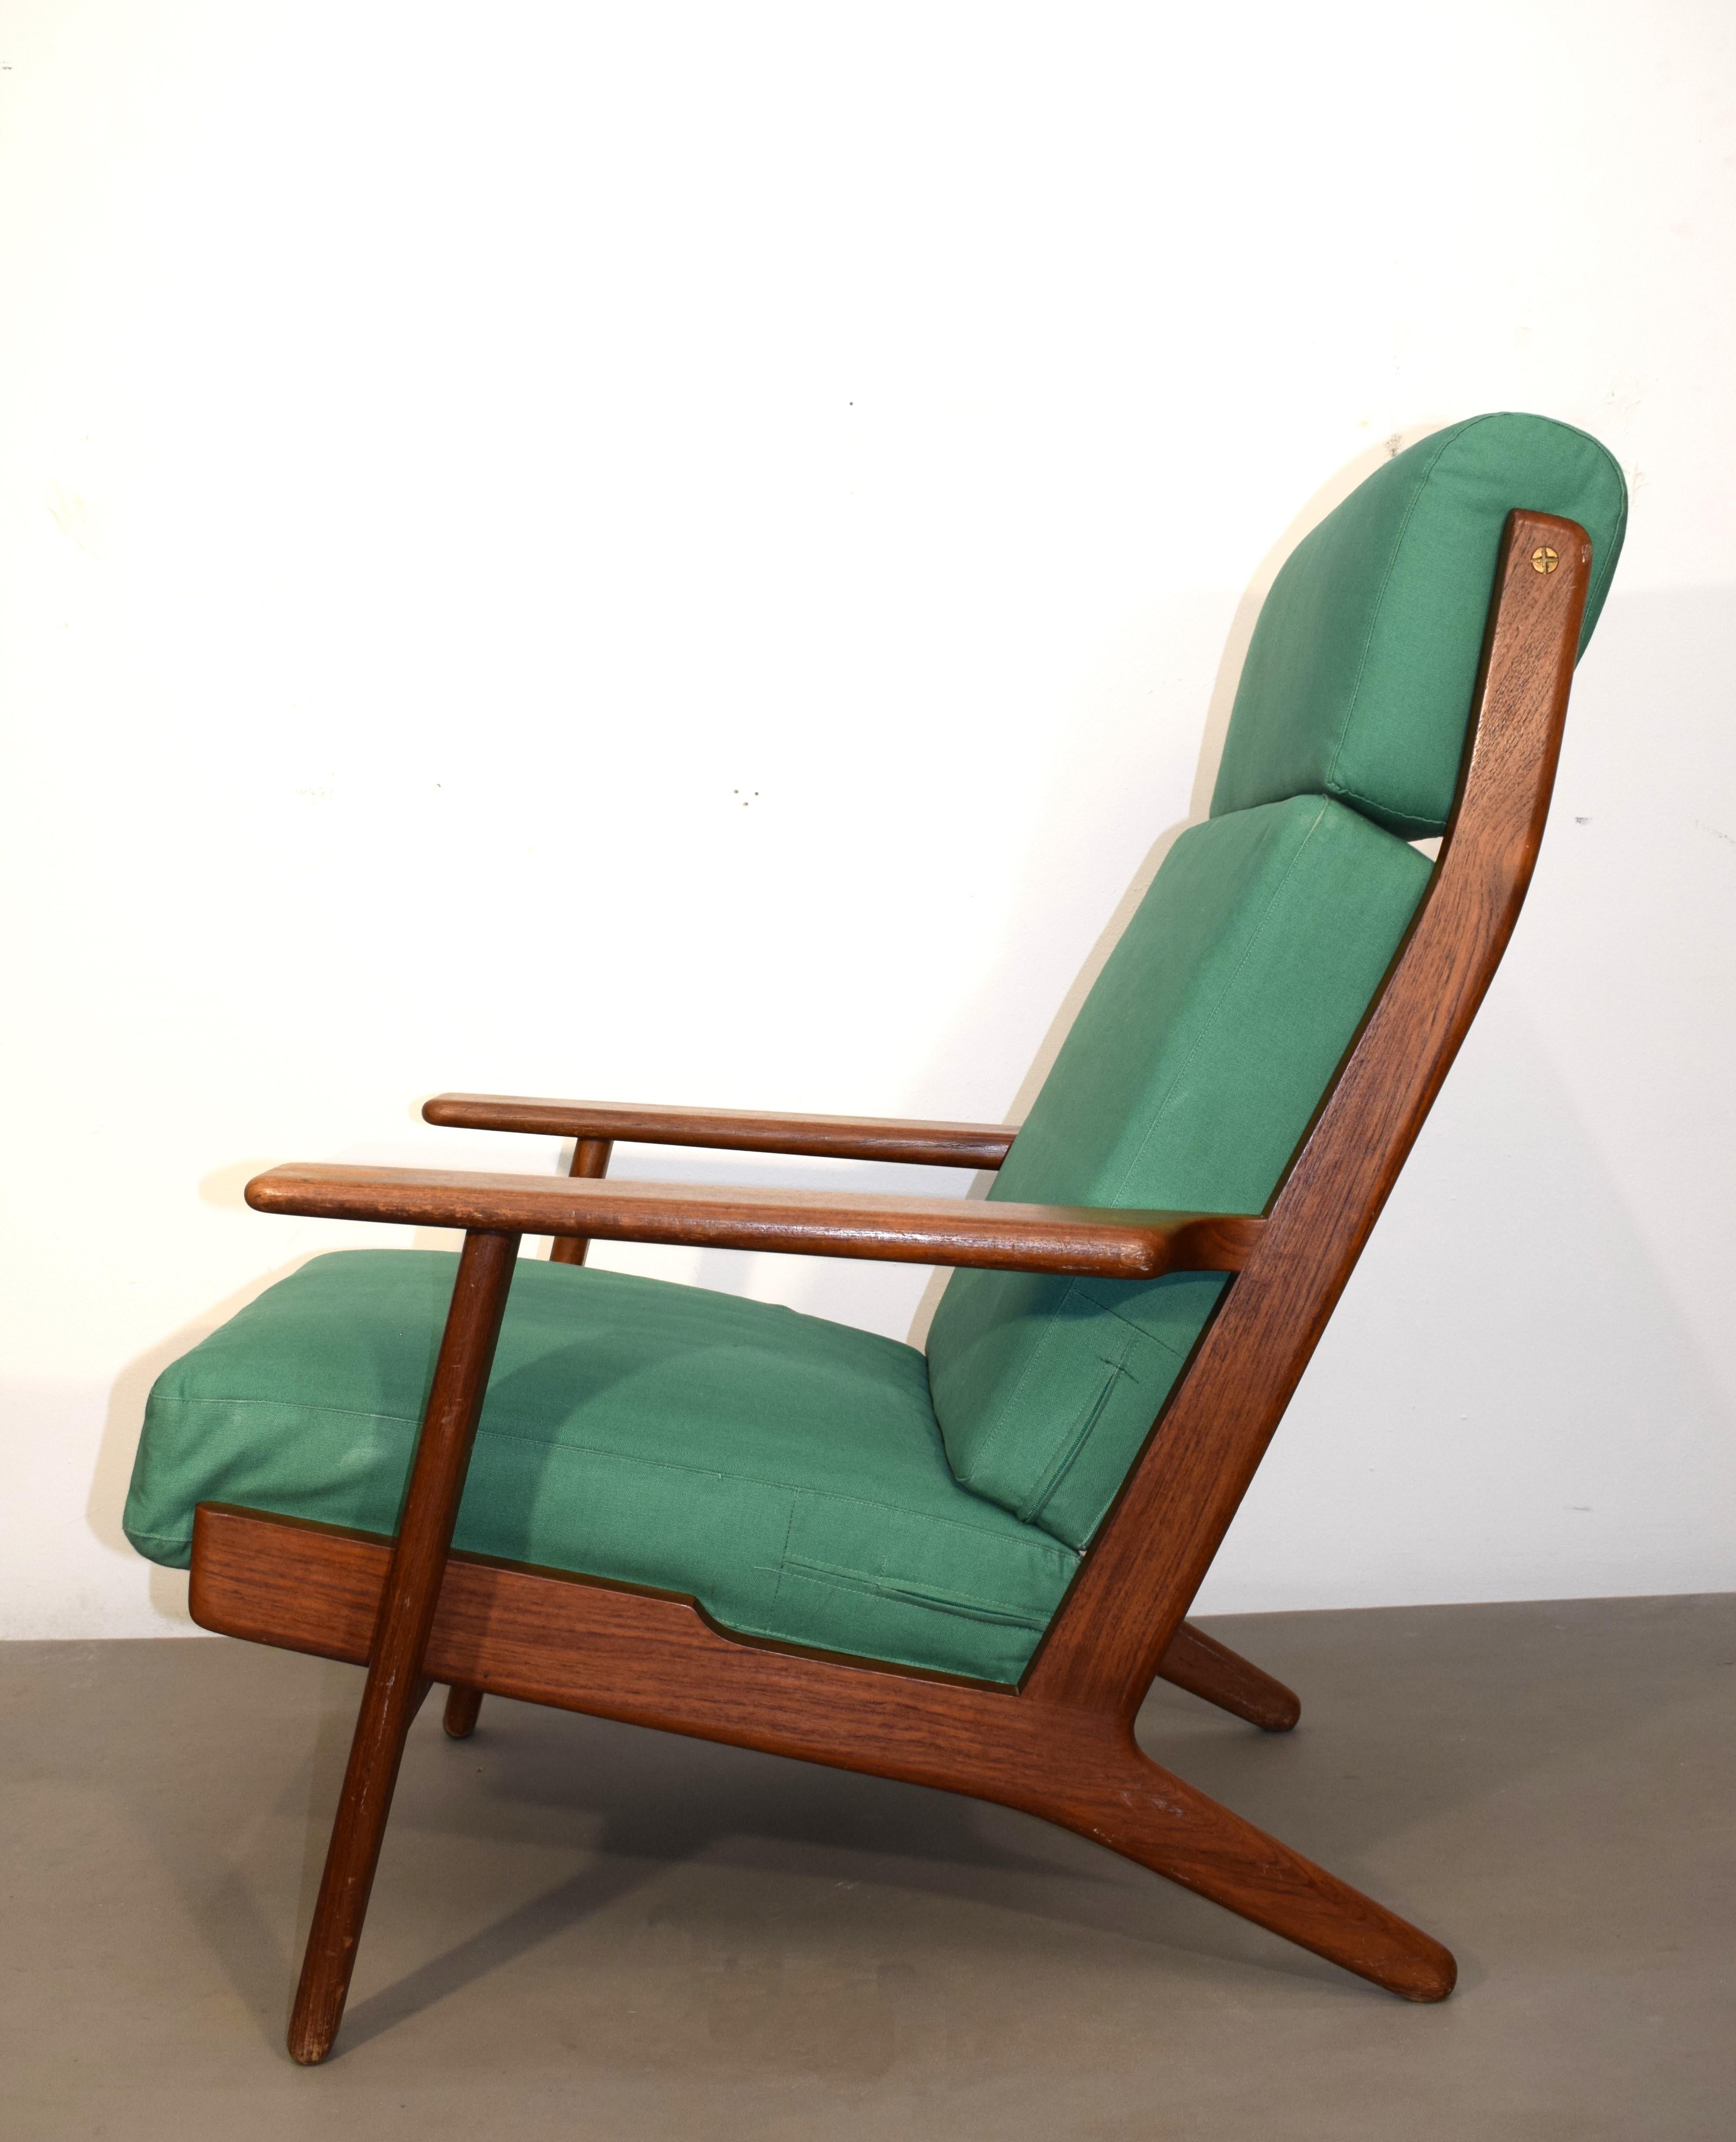 Hans J. Wegner for Getama, Danish production, 1960s.
Dimensions: H= 95 cm; W= 75 cm; D= 89 cm; H seat= 42 cm.